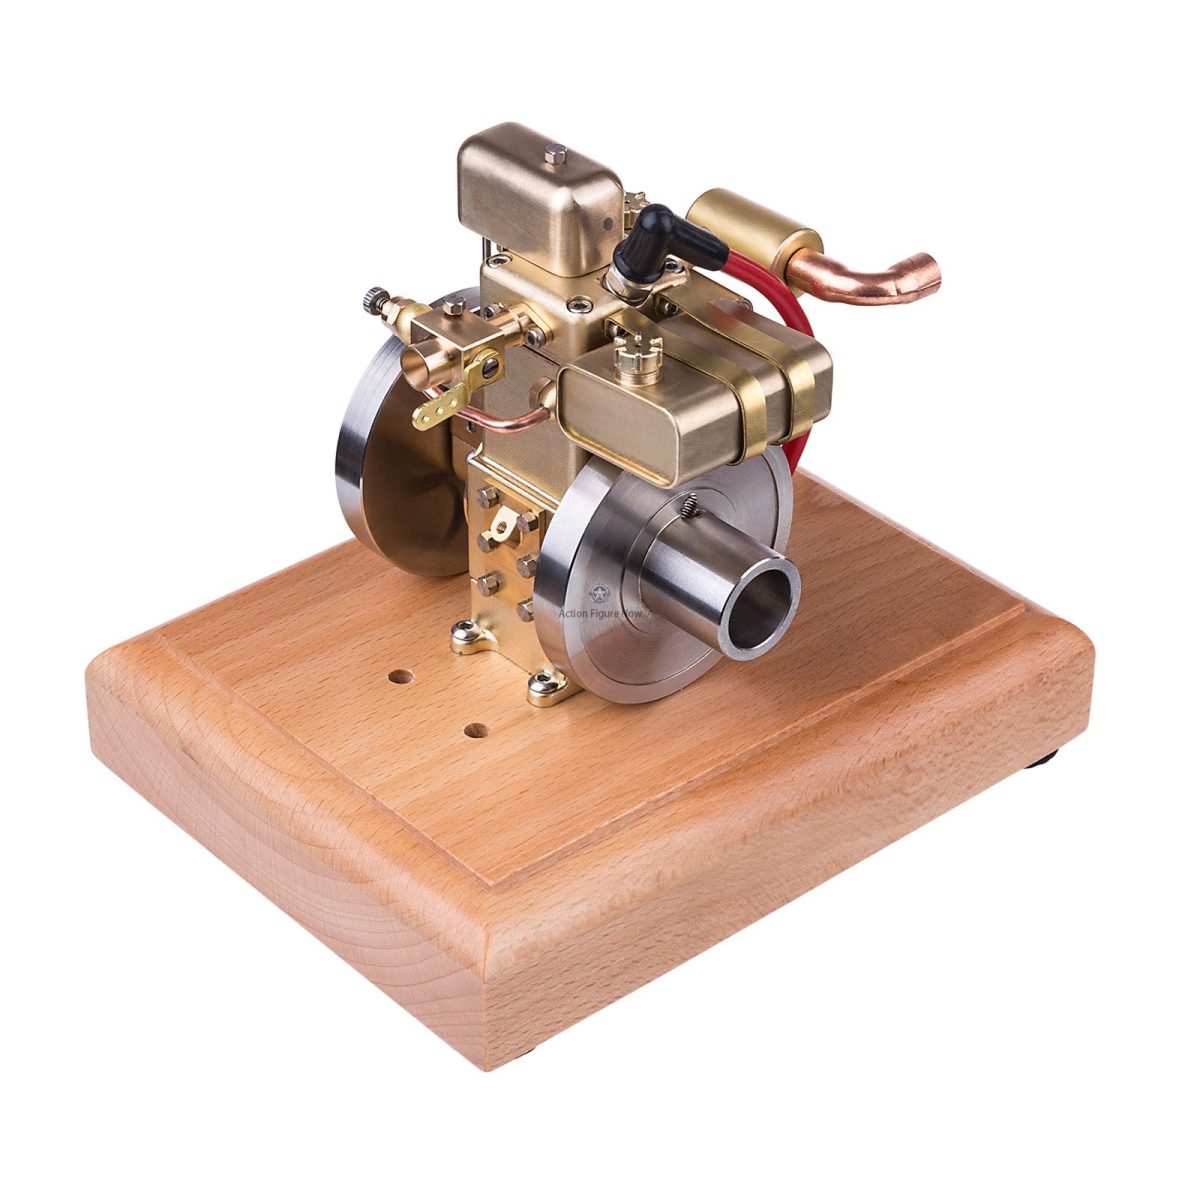 1.6cc Mini Water-cooled Single-cylinder 4-stroke Gasoline Engine Upgrade Kit Combustion Engine Model